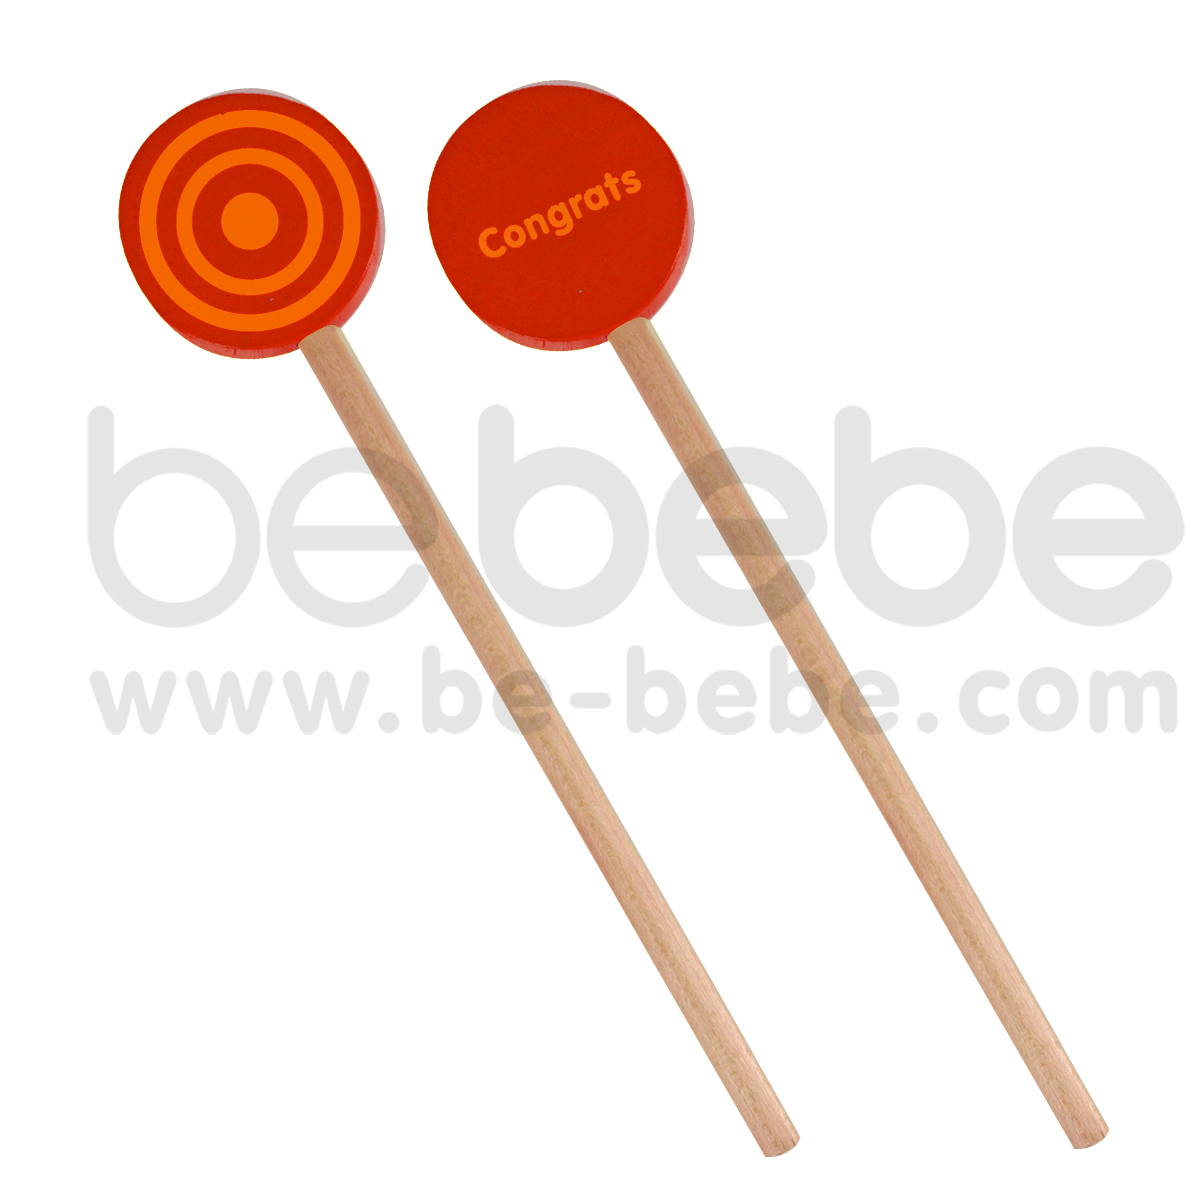 bebebe : ดินสอL วงกลมแดง Congrats